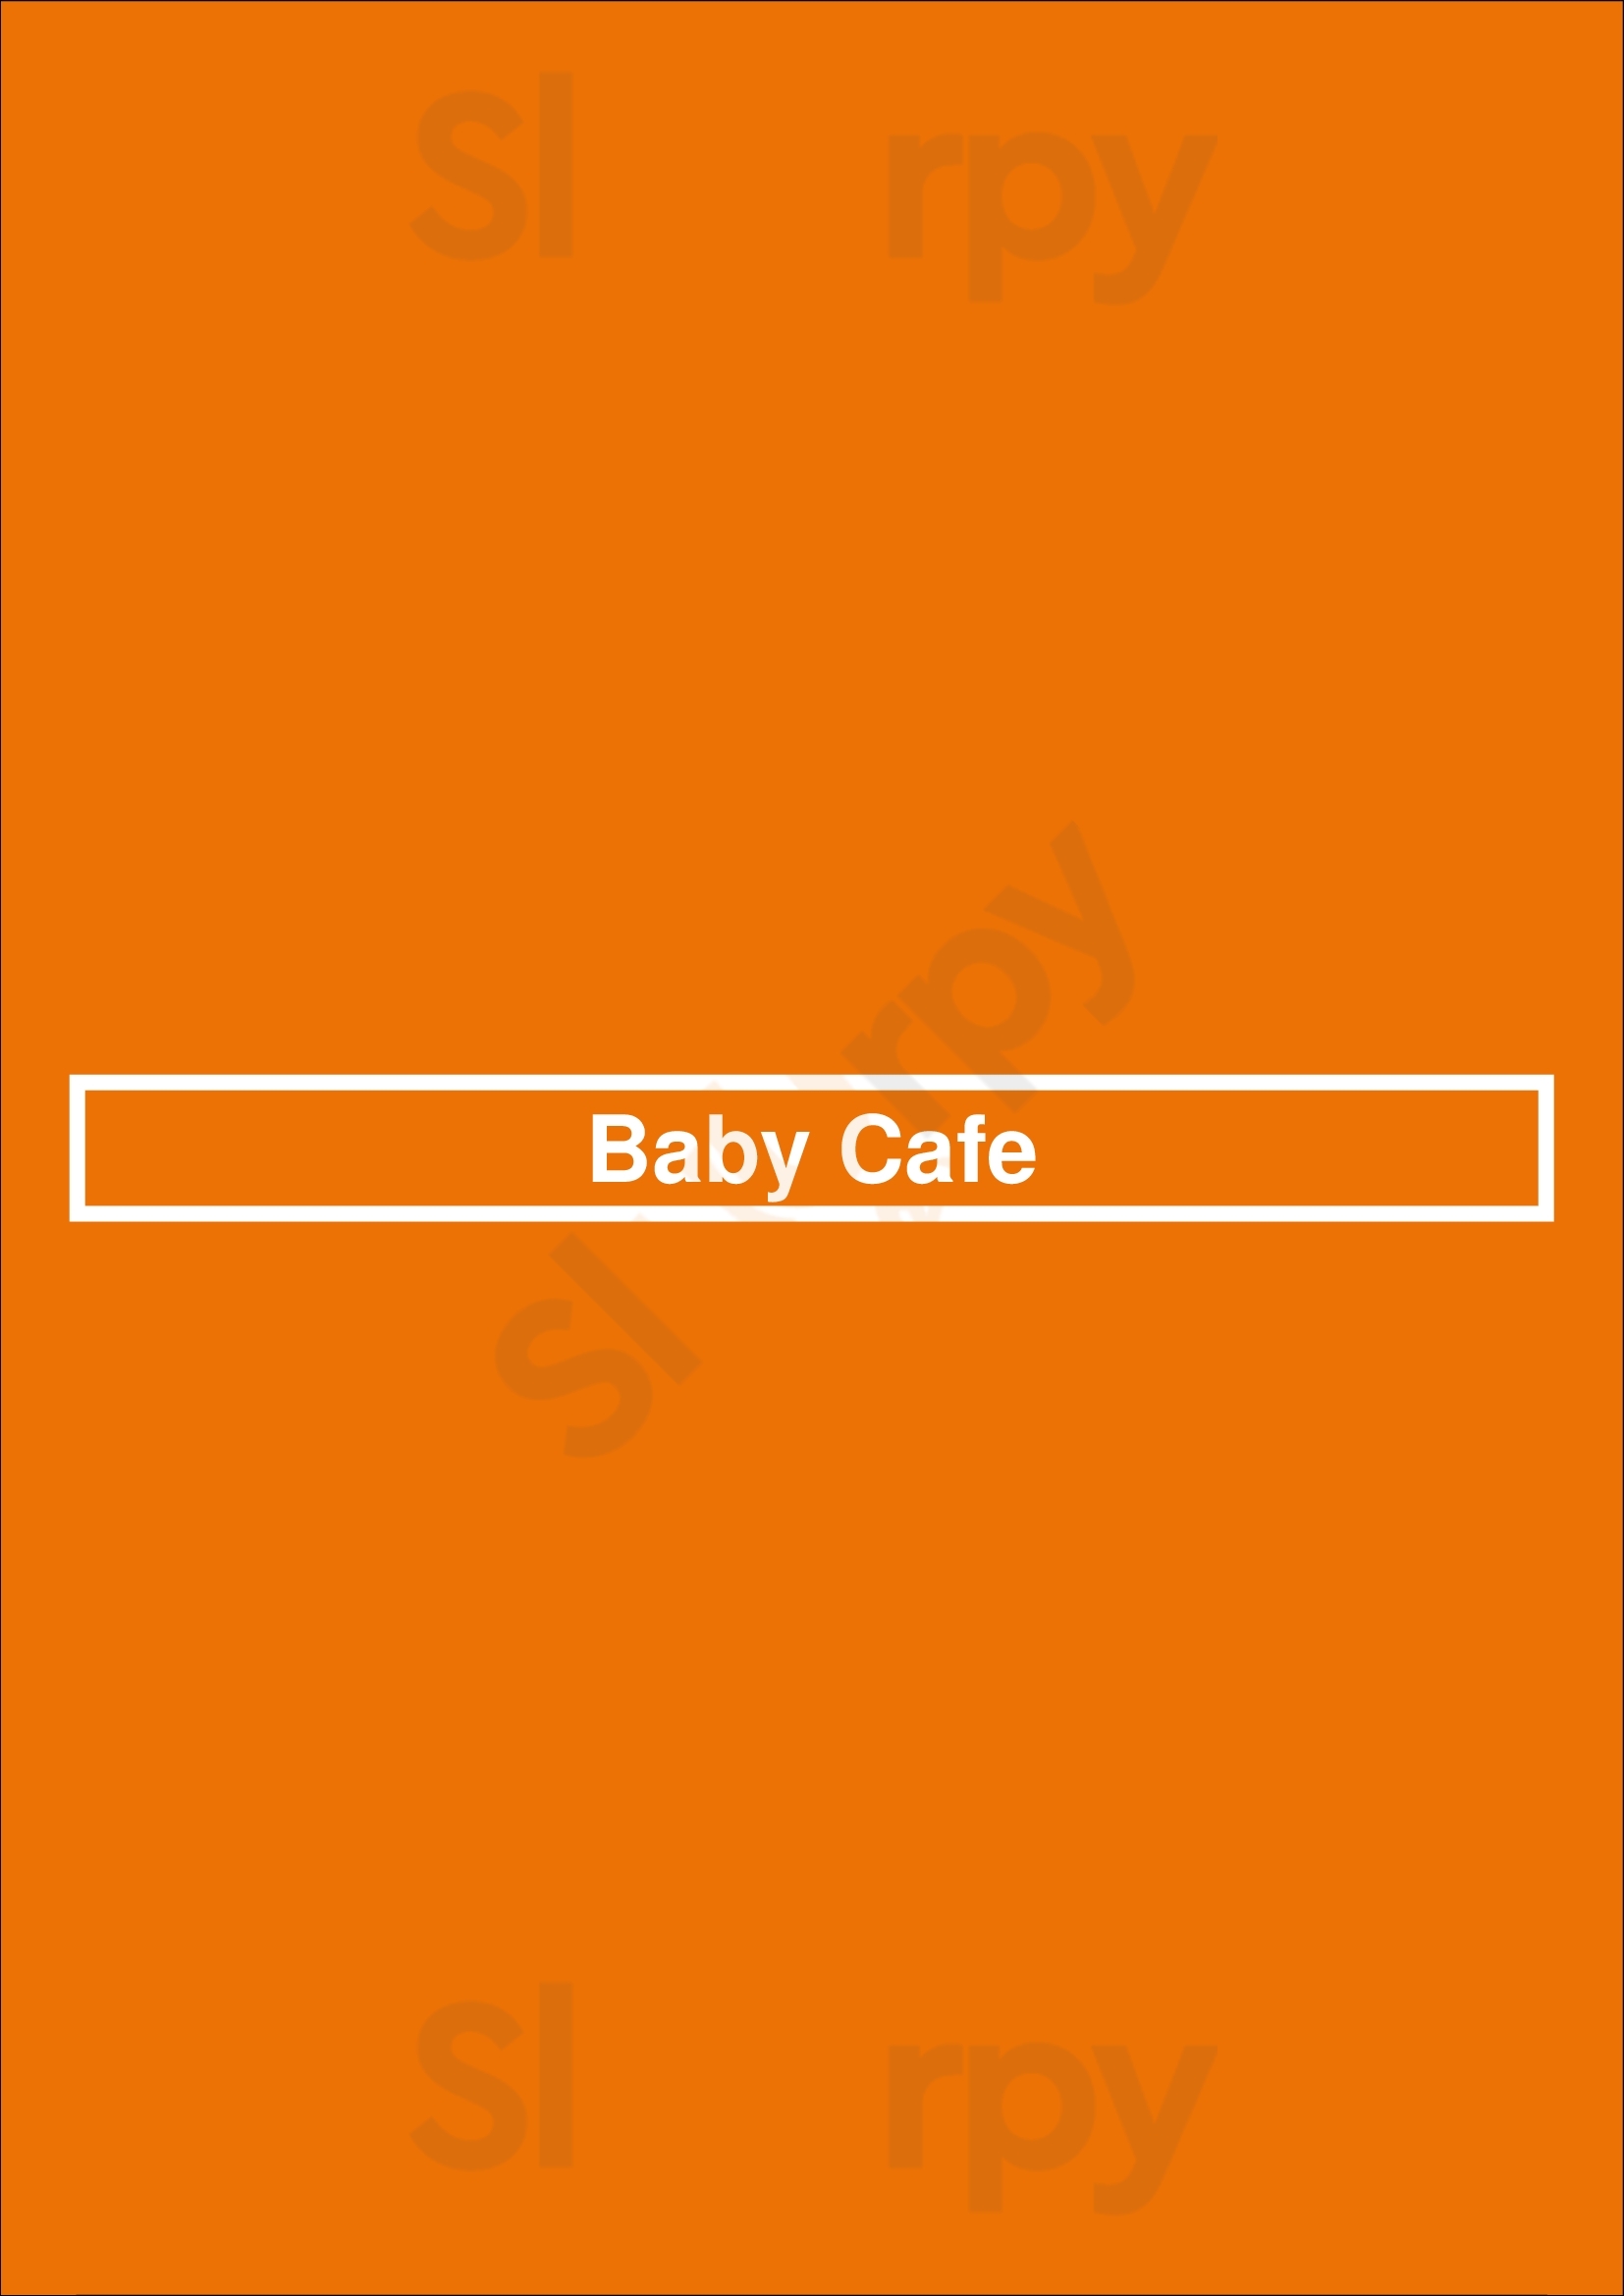 Baby Cafe Oakland Menu - 1